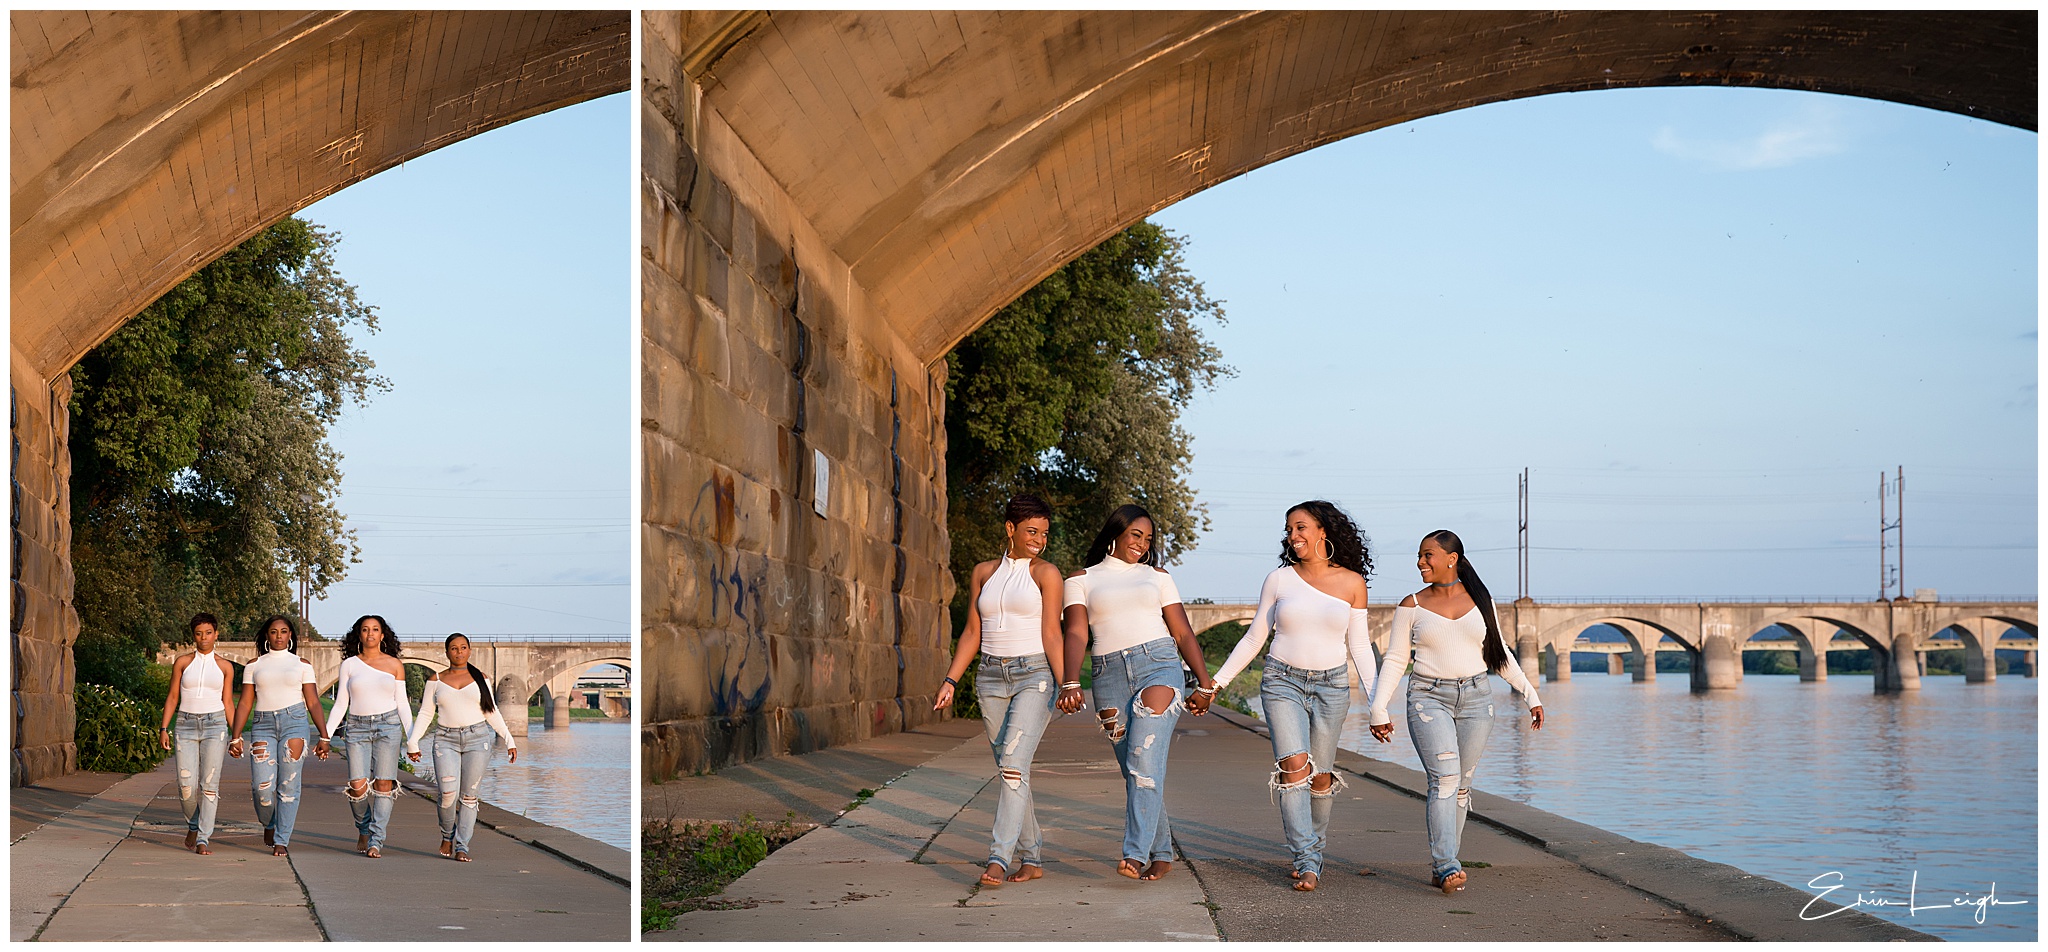 Urban Singer Sisters Photos | Downtown Harrisburg PA by Harrisburg Photographer Photography by Erin Leigh